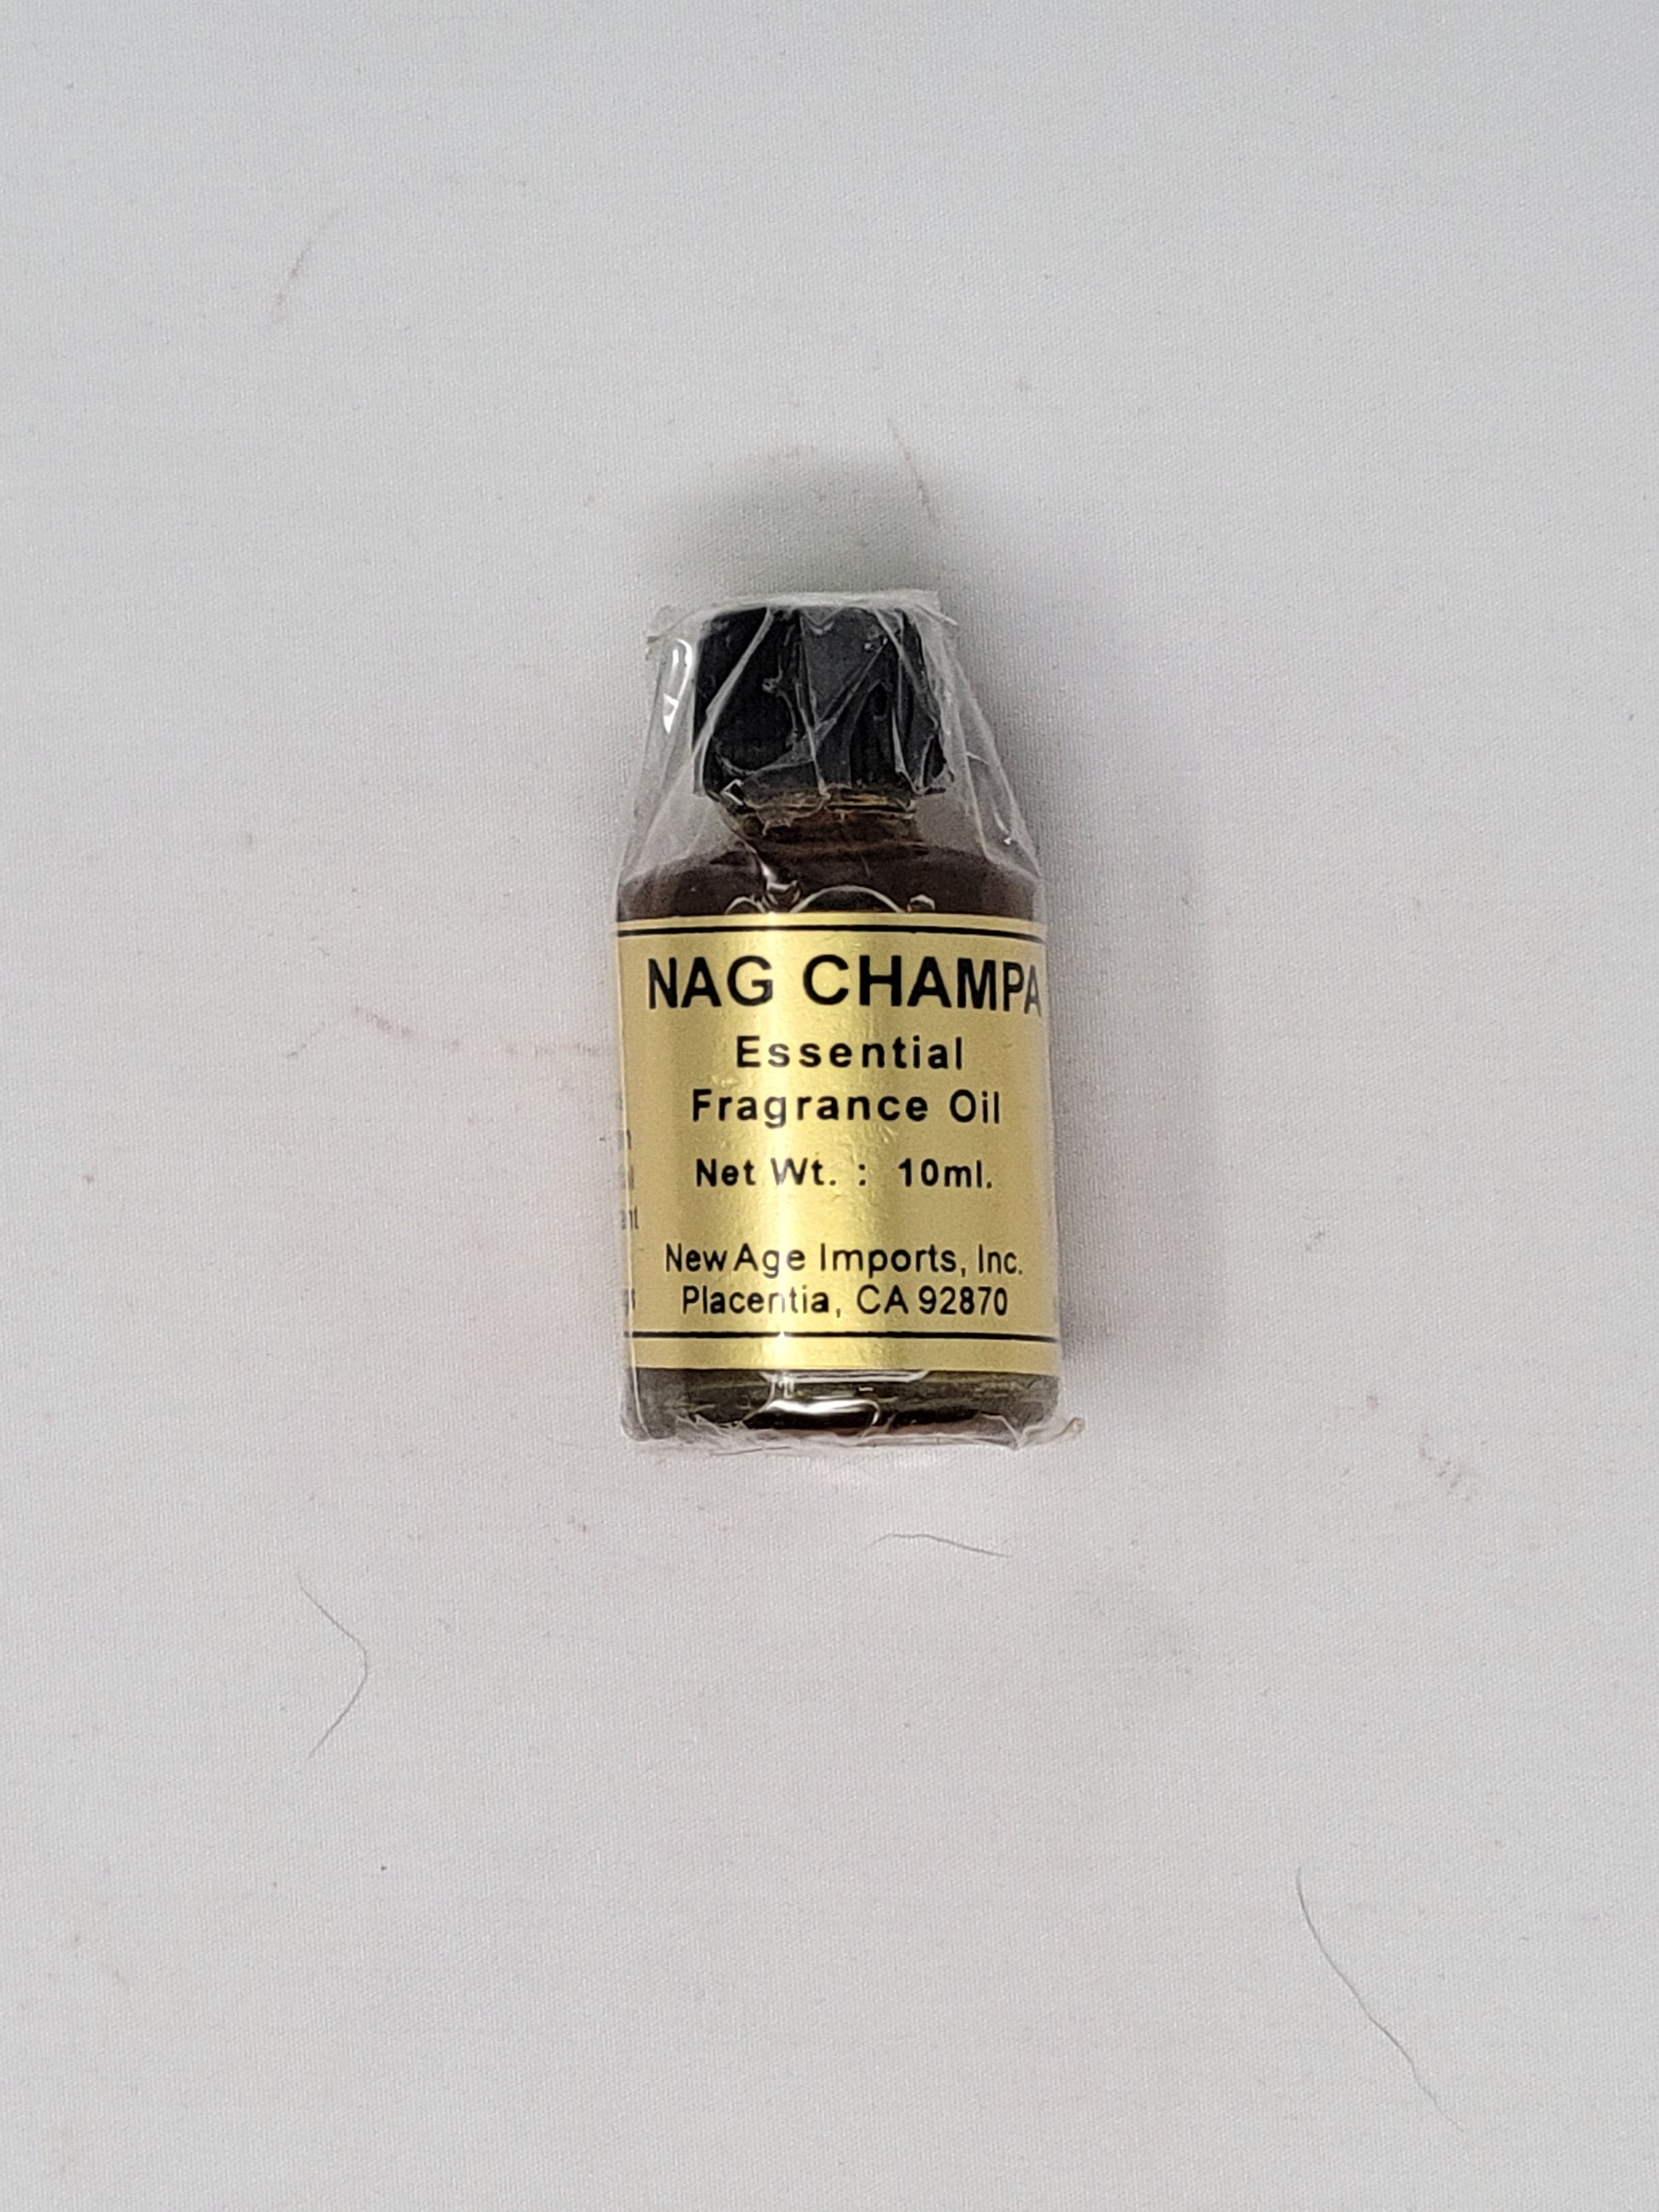 Essential Aroma Oil Nag Champa